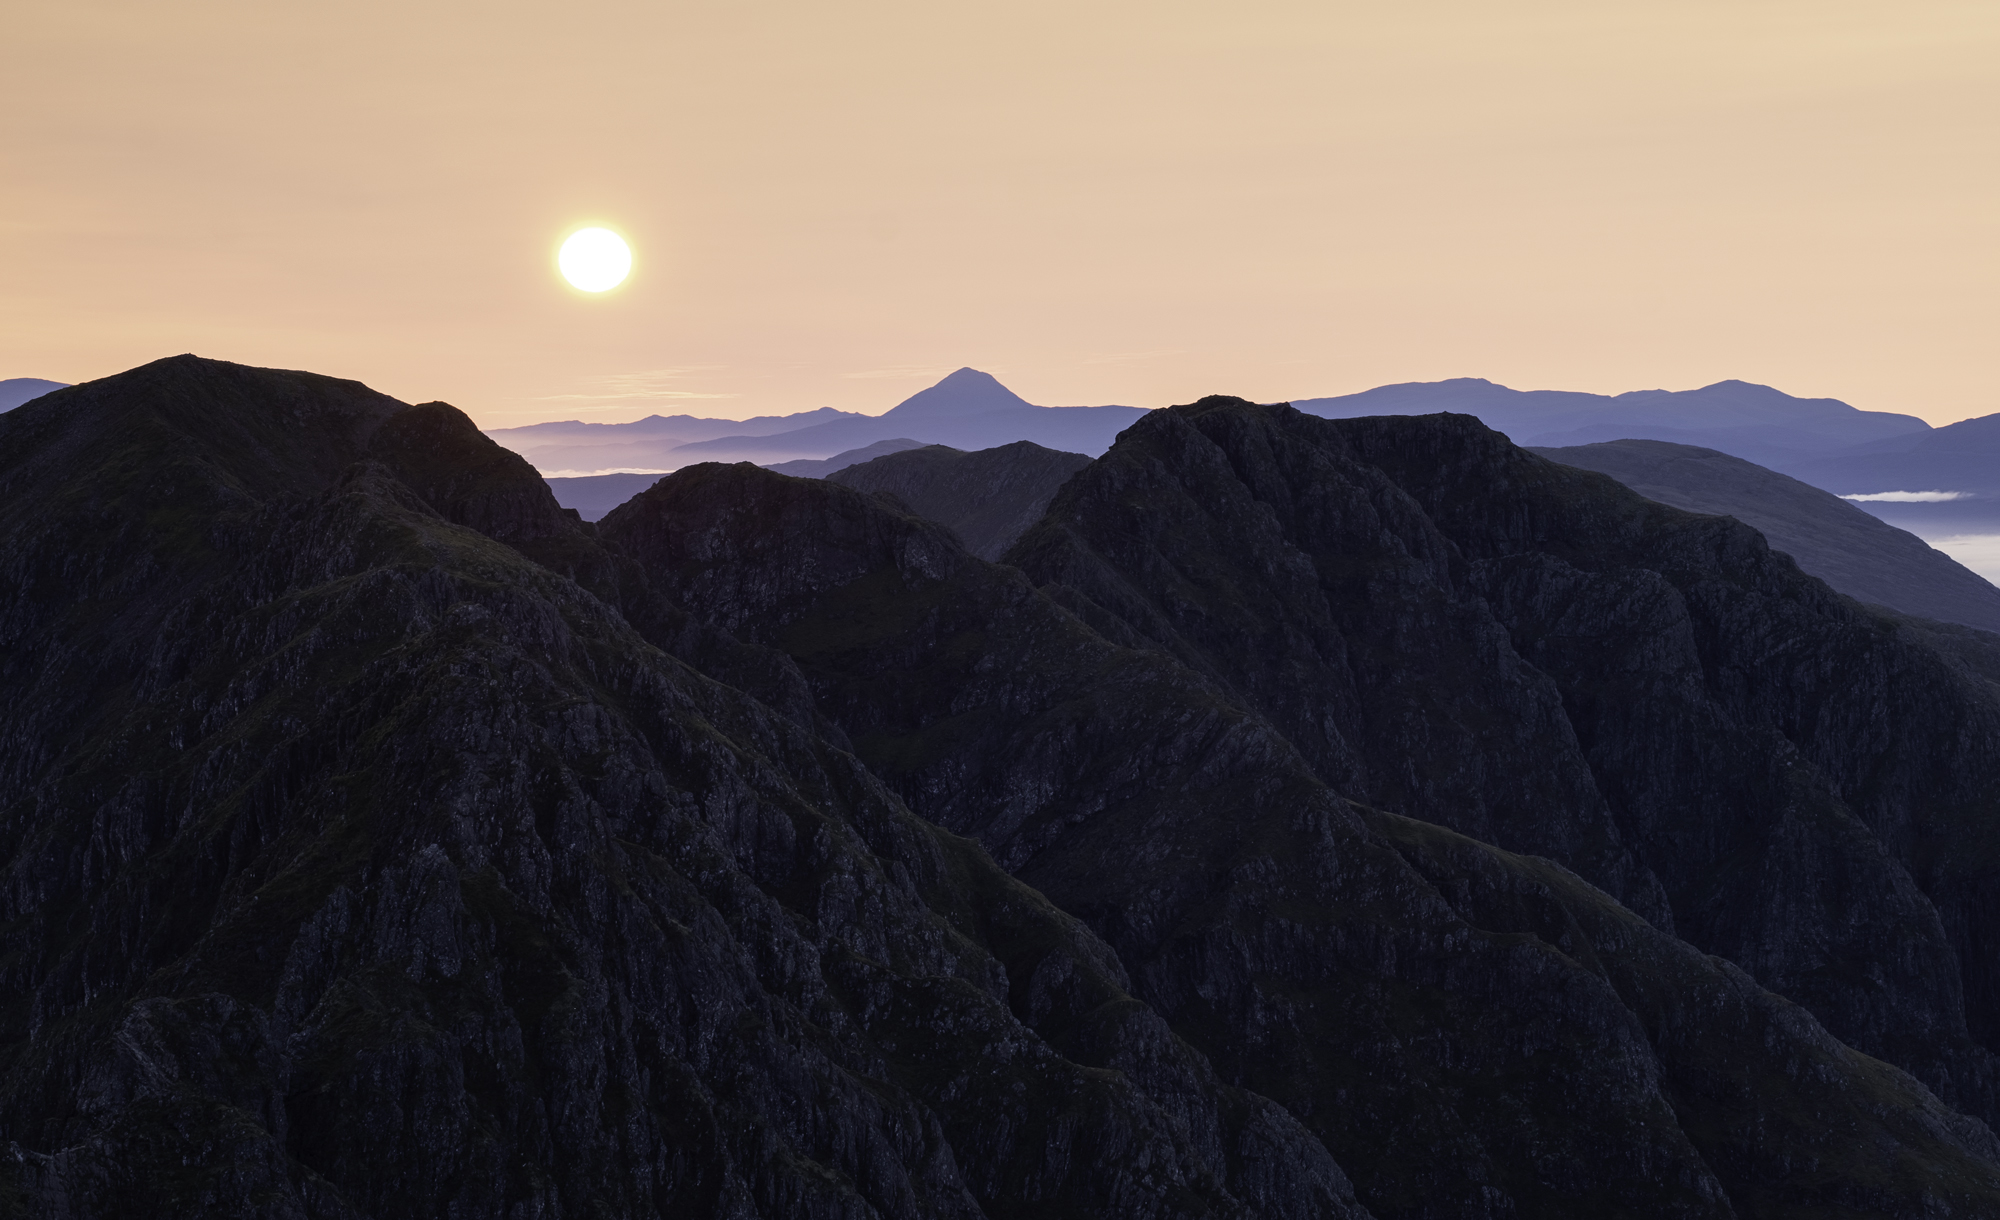 Landscape image taken of Aonach Eagach, Glencoe at sunrise